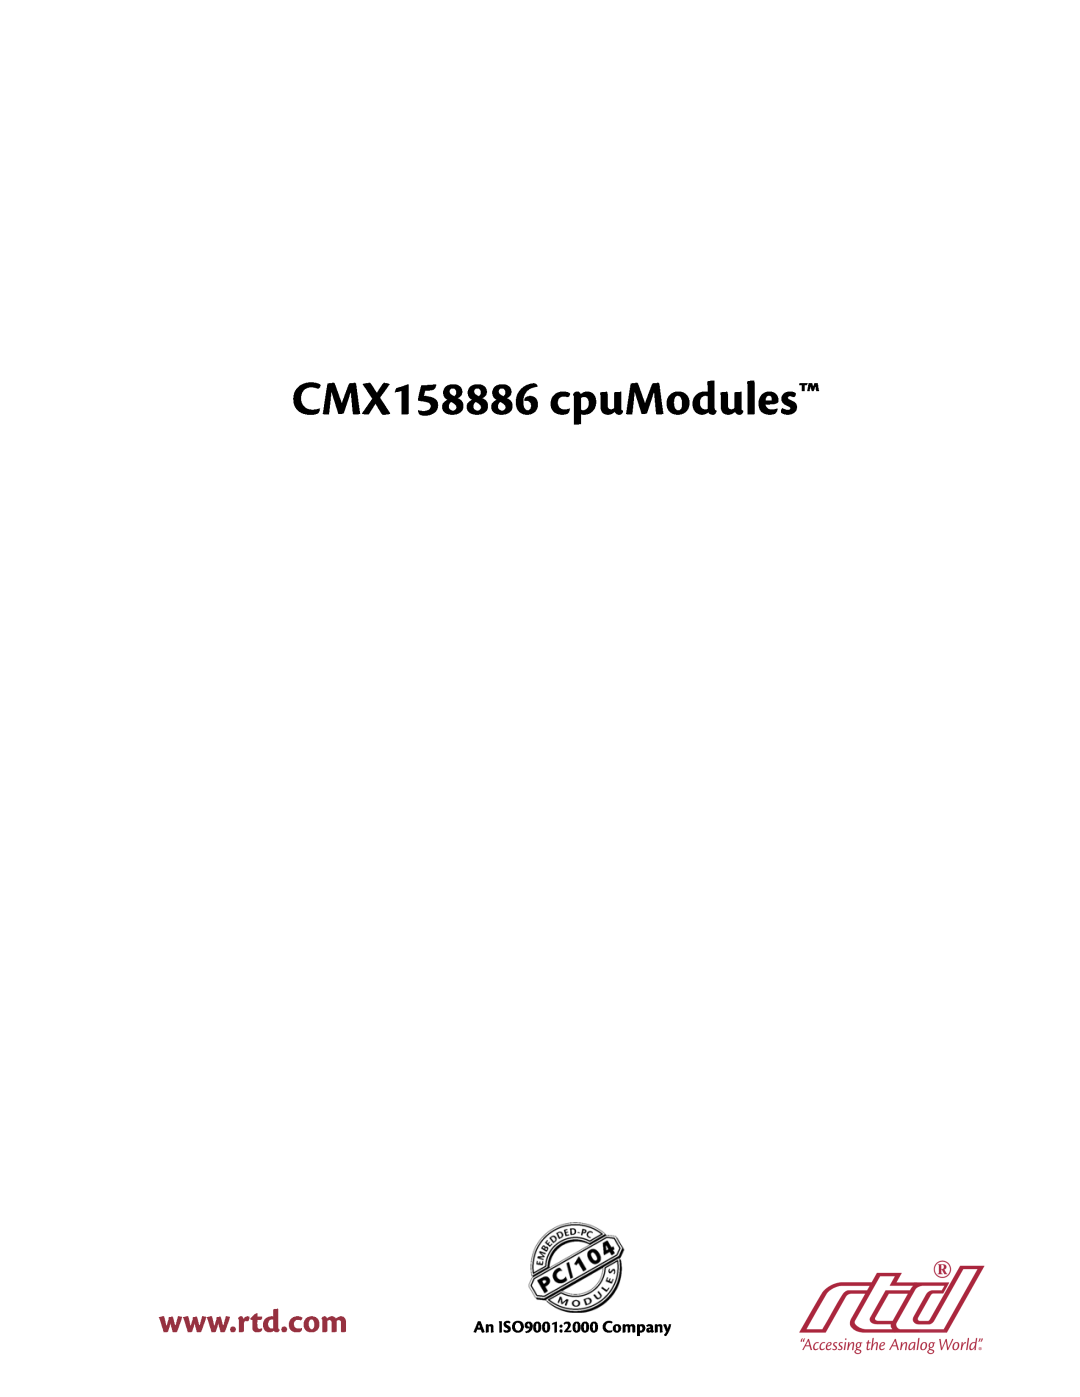 IBM BDM-610000049 user manual CMX158886 cpuModules, “Accessing the Analog World” 